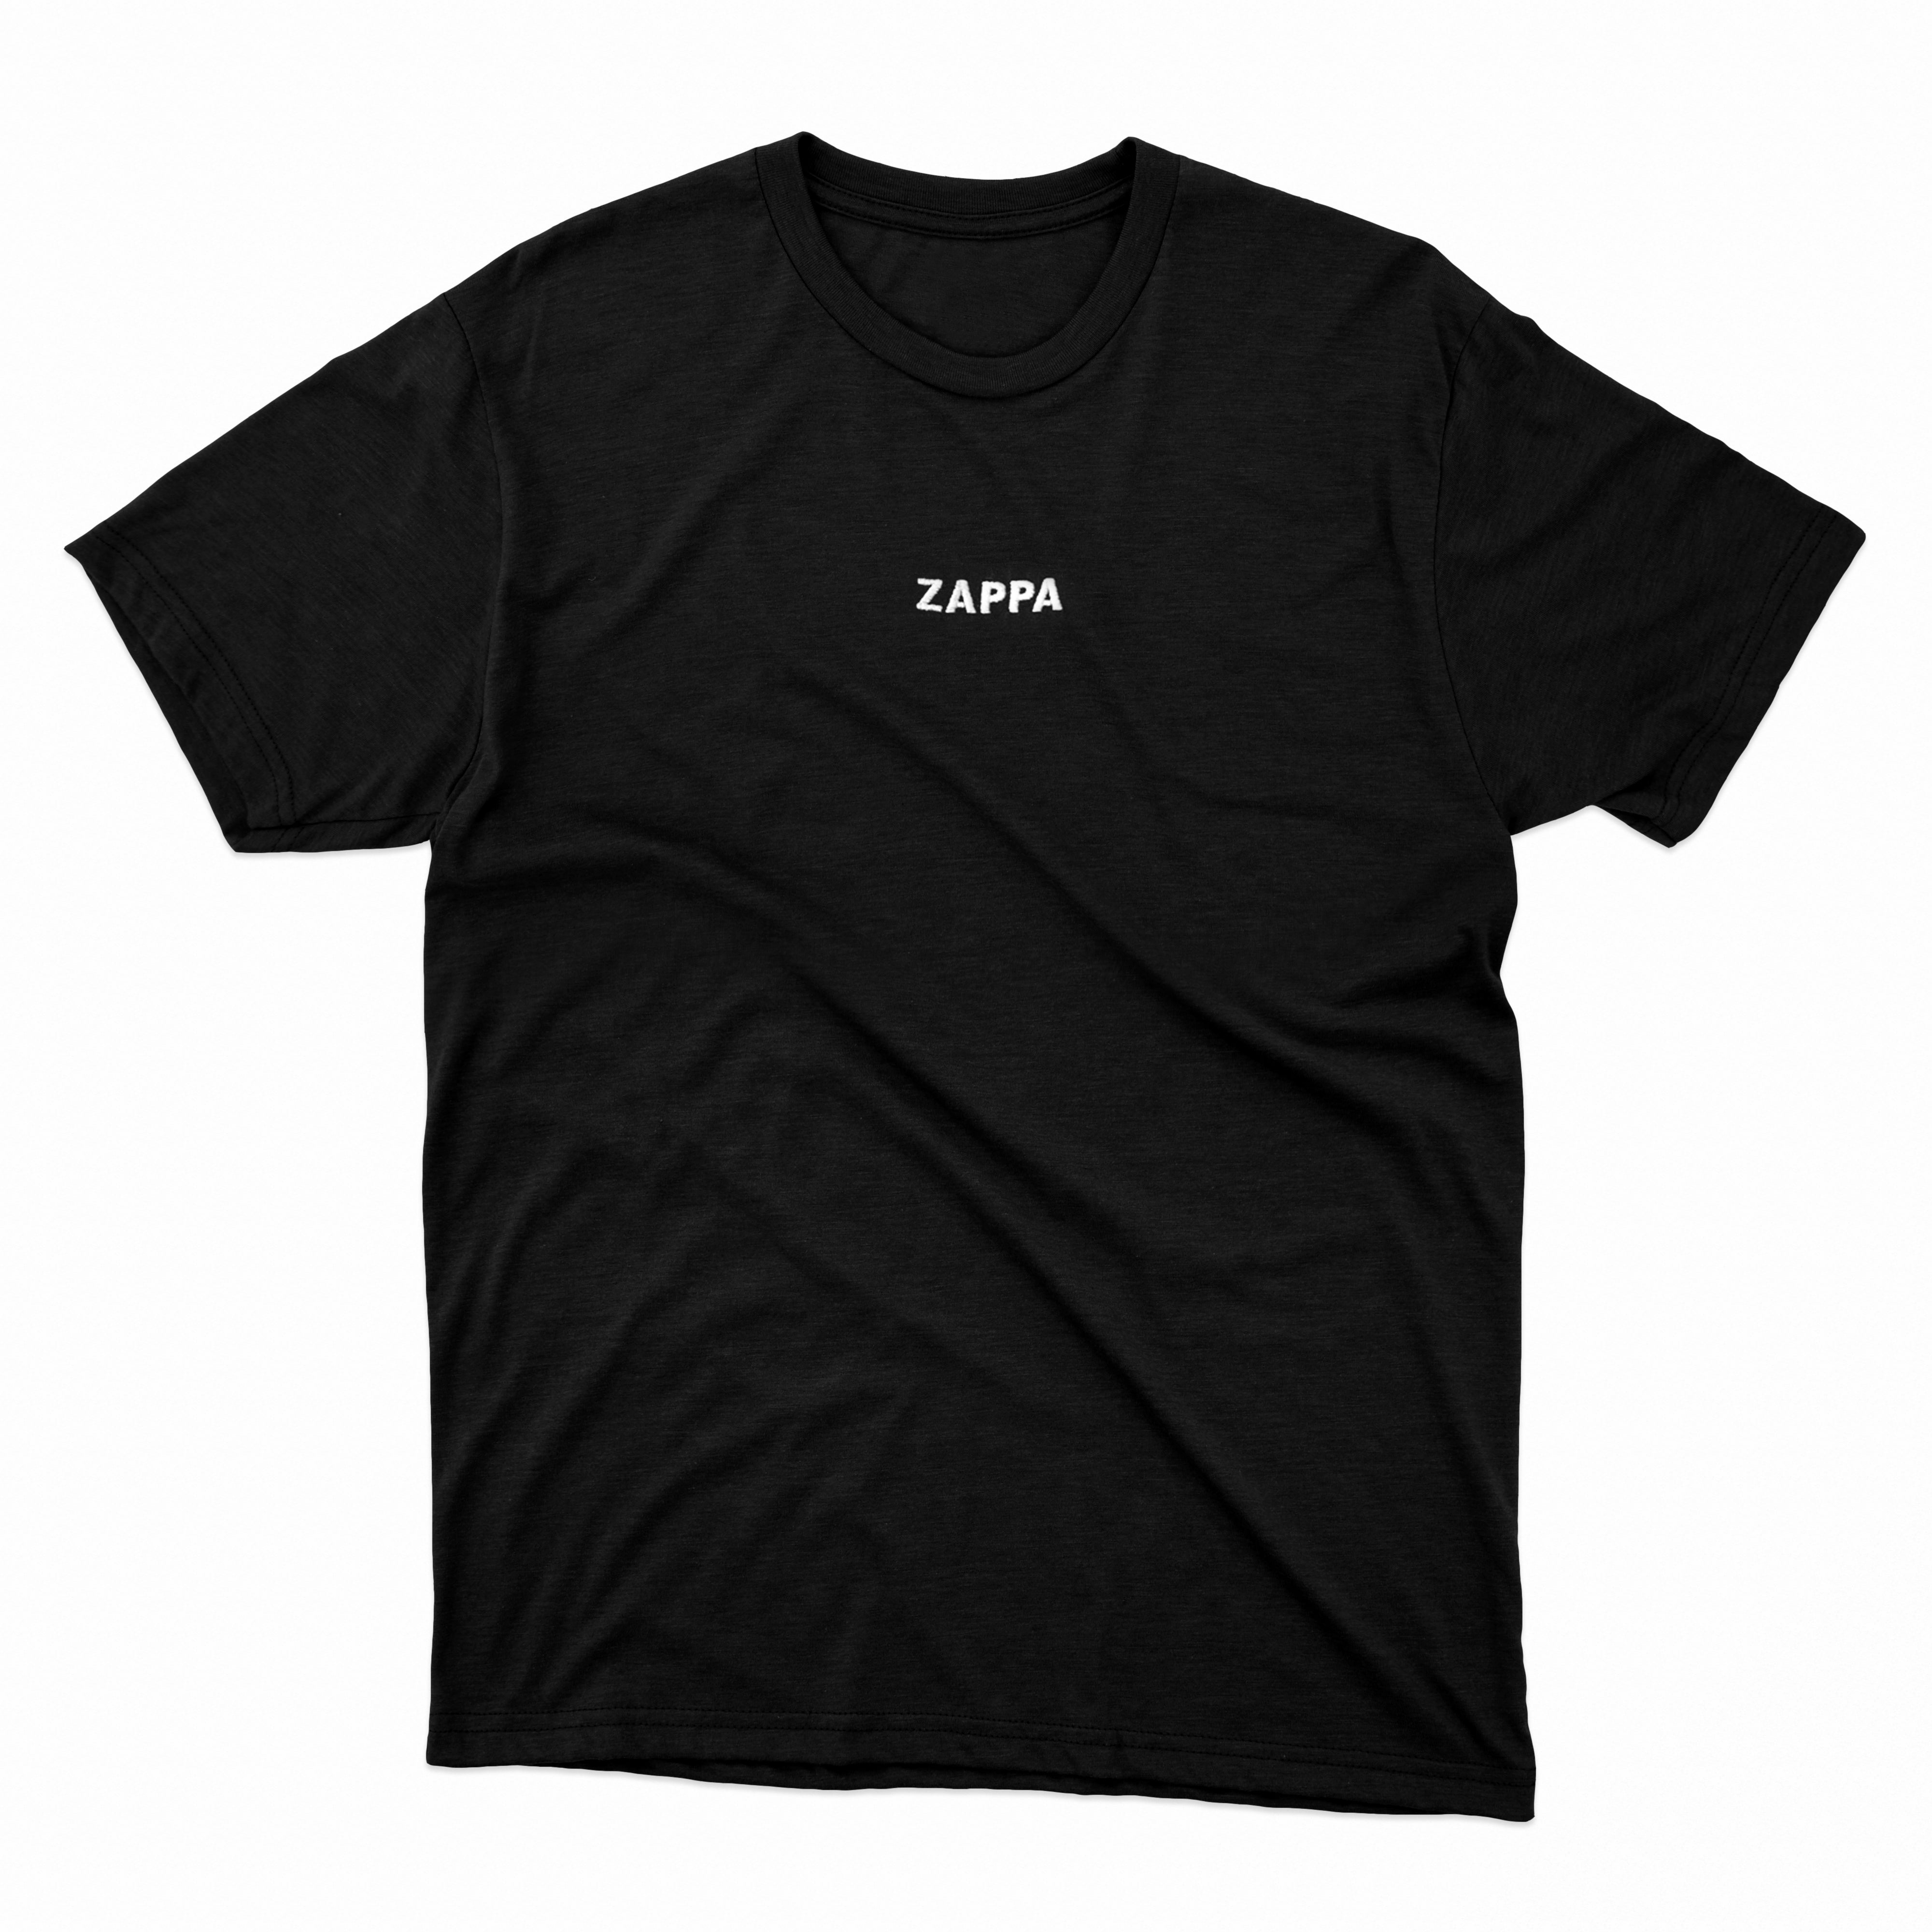 Zappa The Cat - Black T-shirt